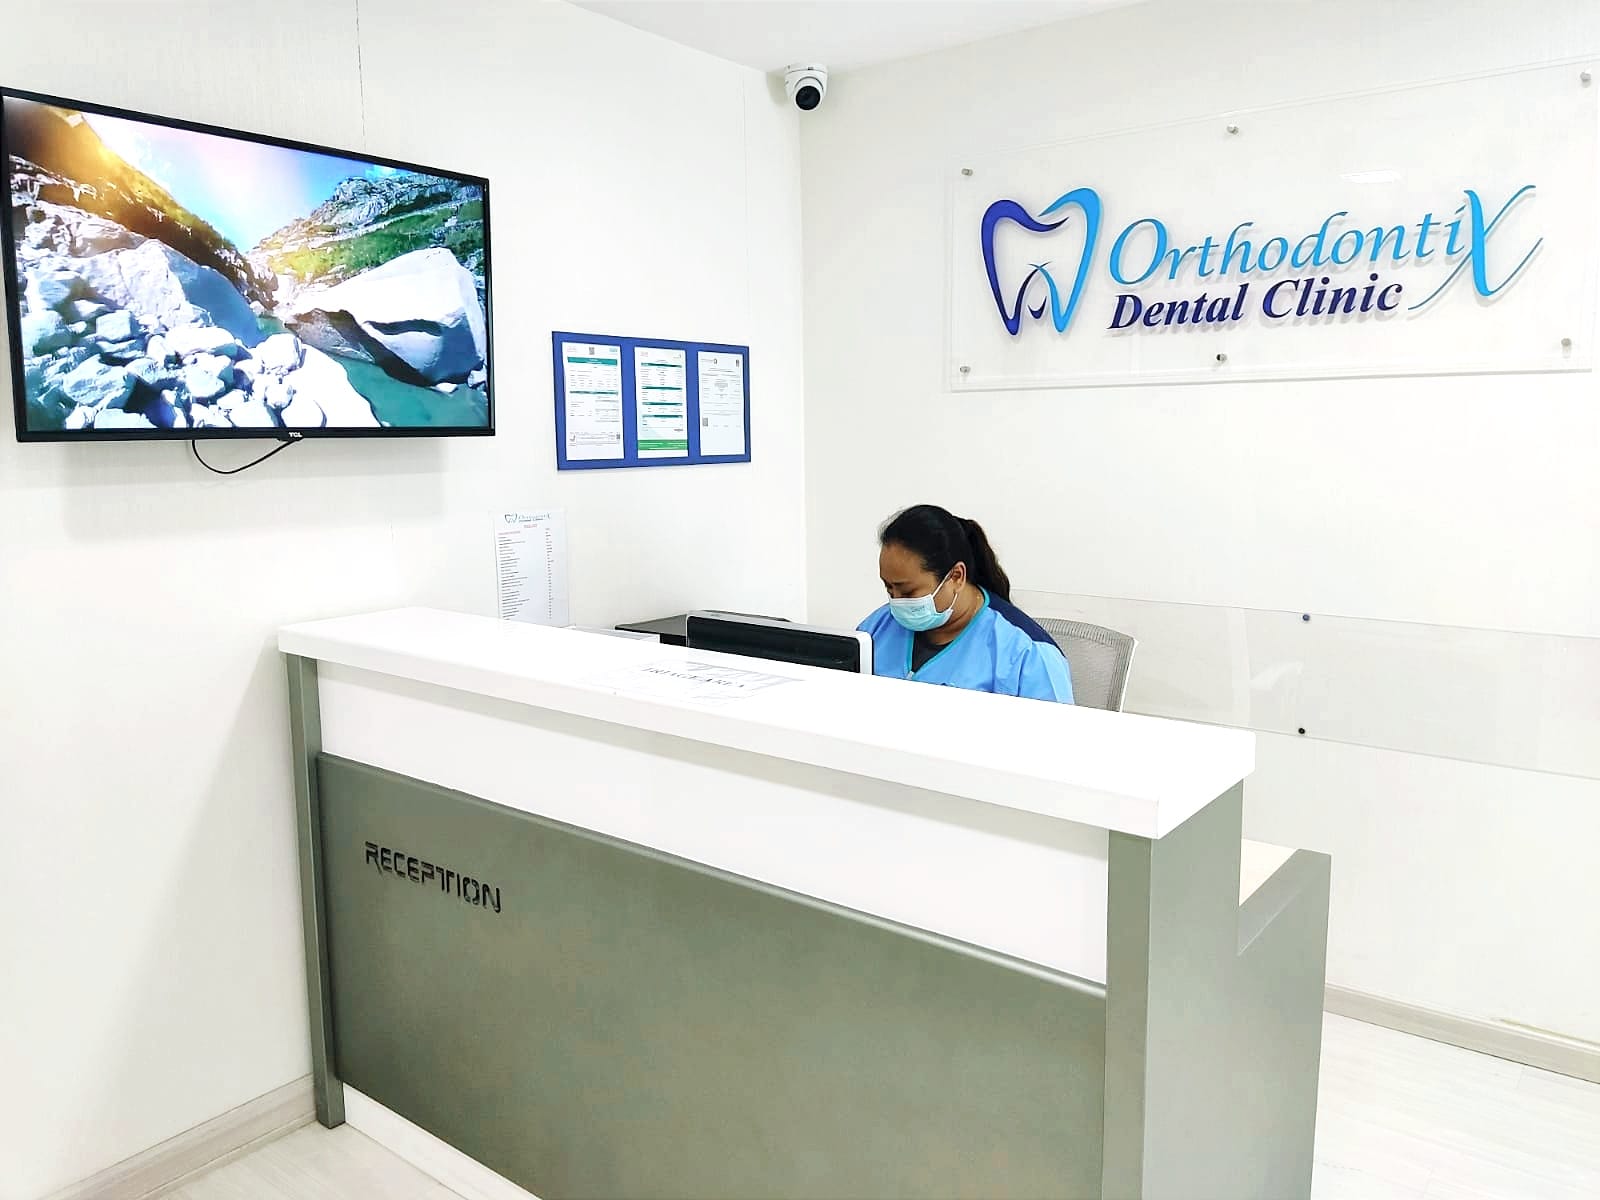 Orthodontix Dental Clinic in Dubai, UAE. Reception picture